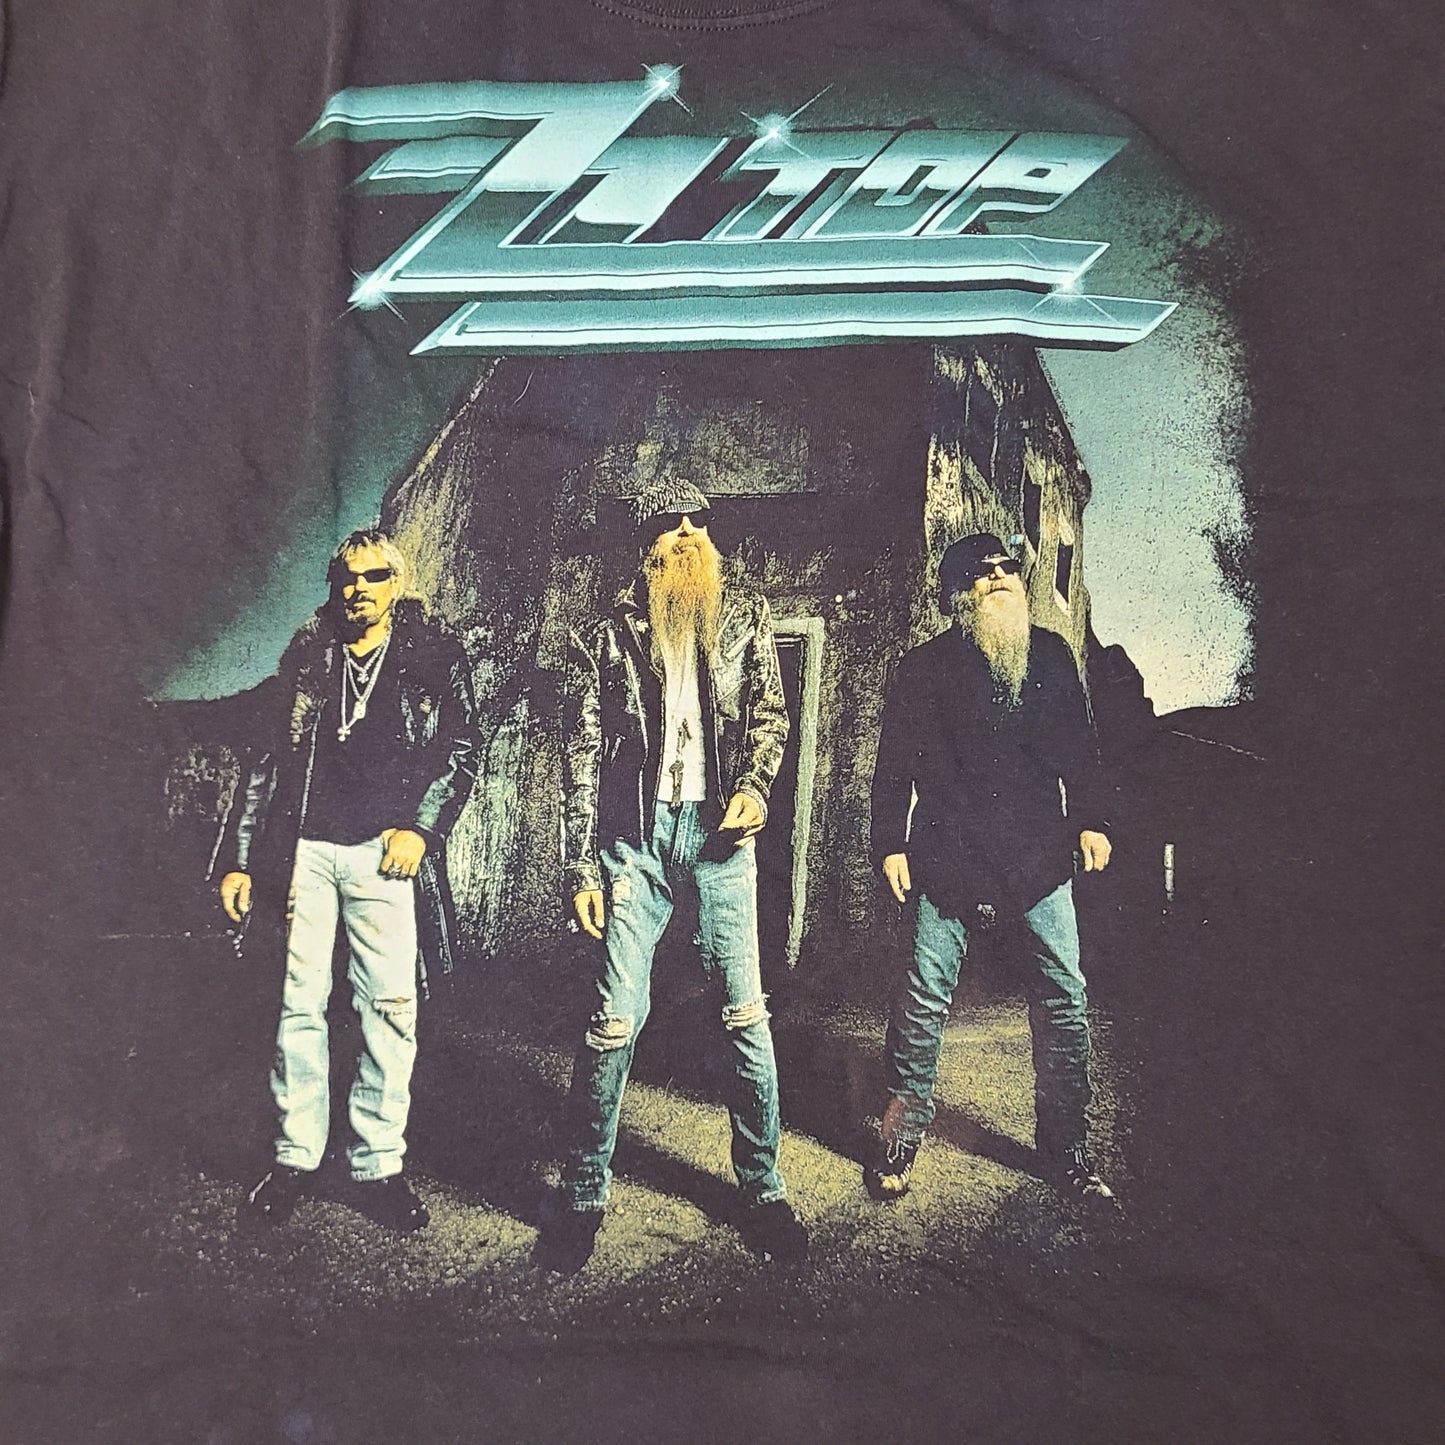 ZZ Top True Vintage T Shirt